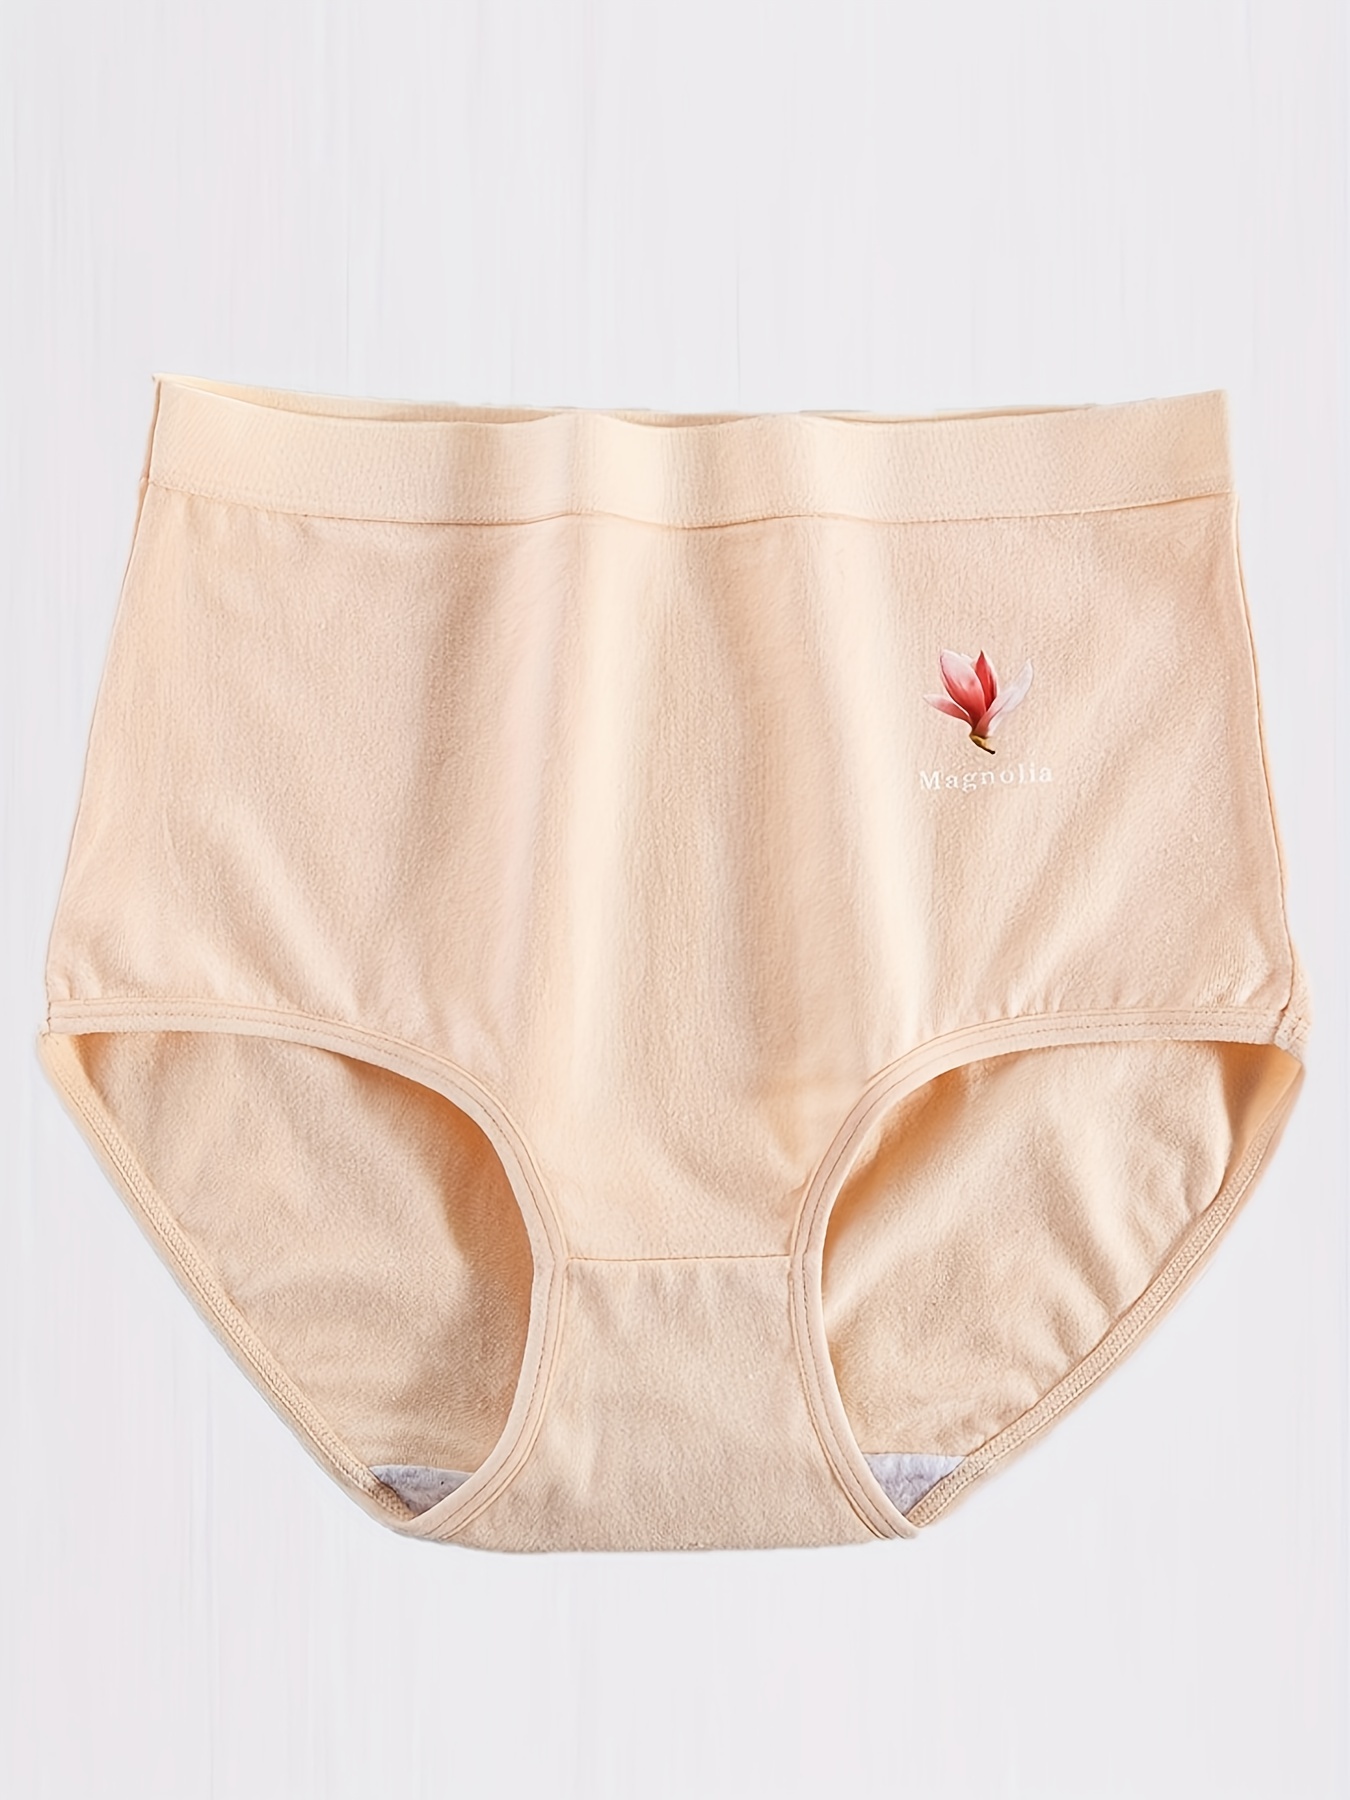 2Pcs/lot S-XXL Plus Size High Waist Lace Panties Women Seamless Briefs  Hollow Lingerie Underwear